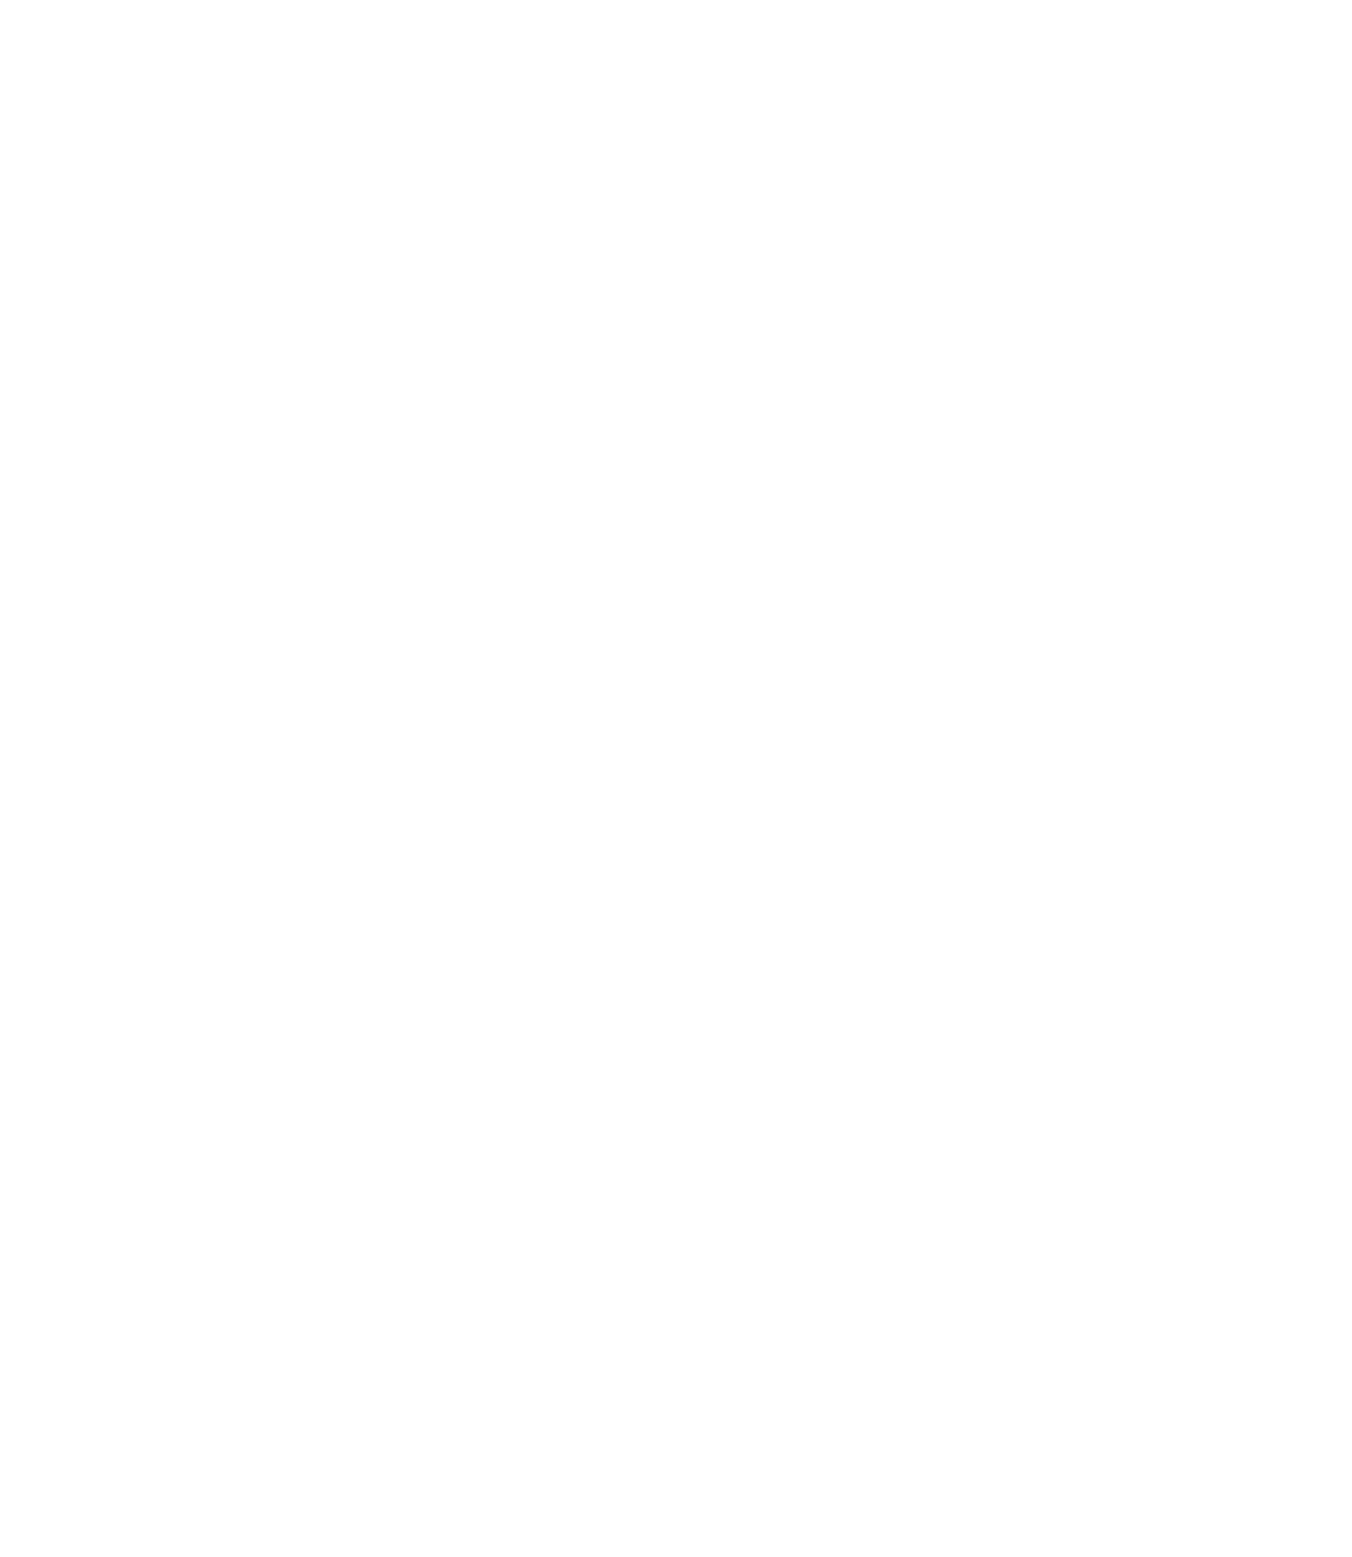 Universal Technical Institute logo pour fonds sombres (PNG transparent)